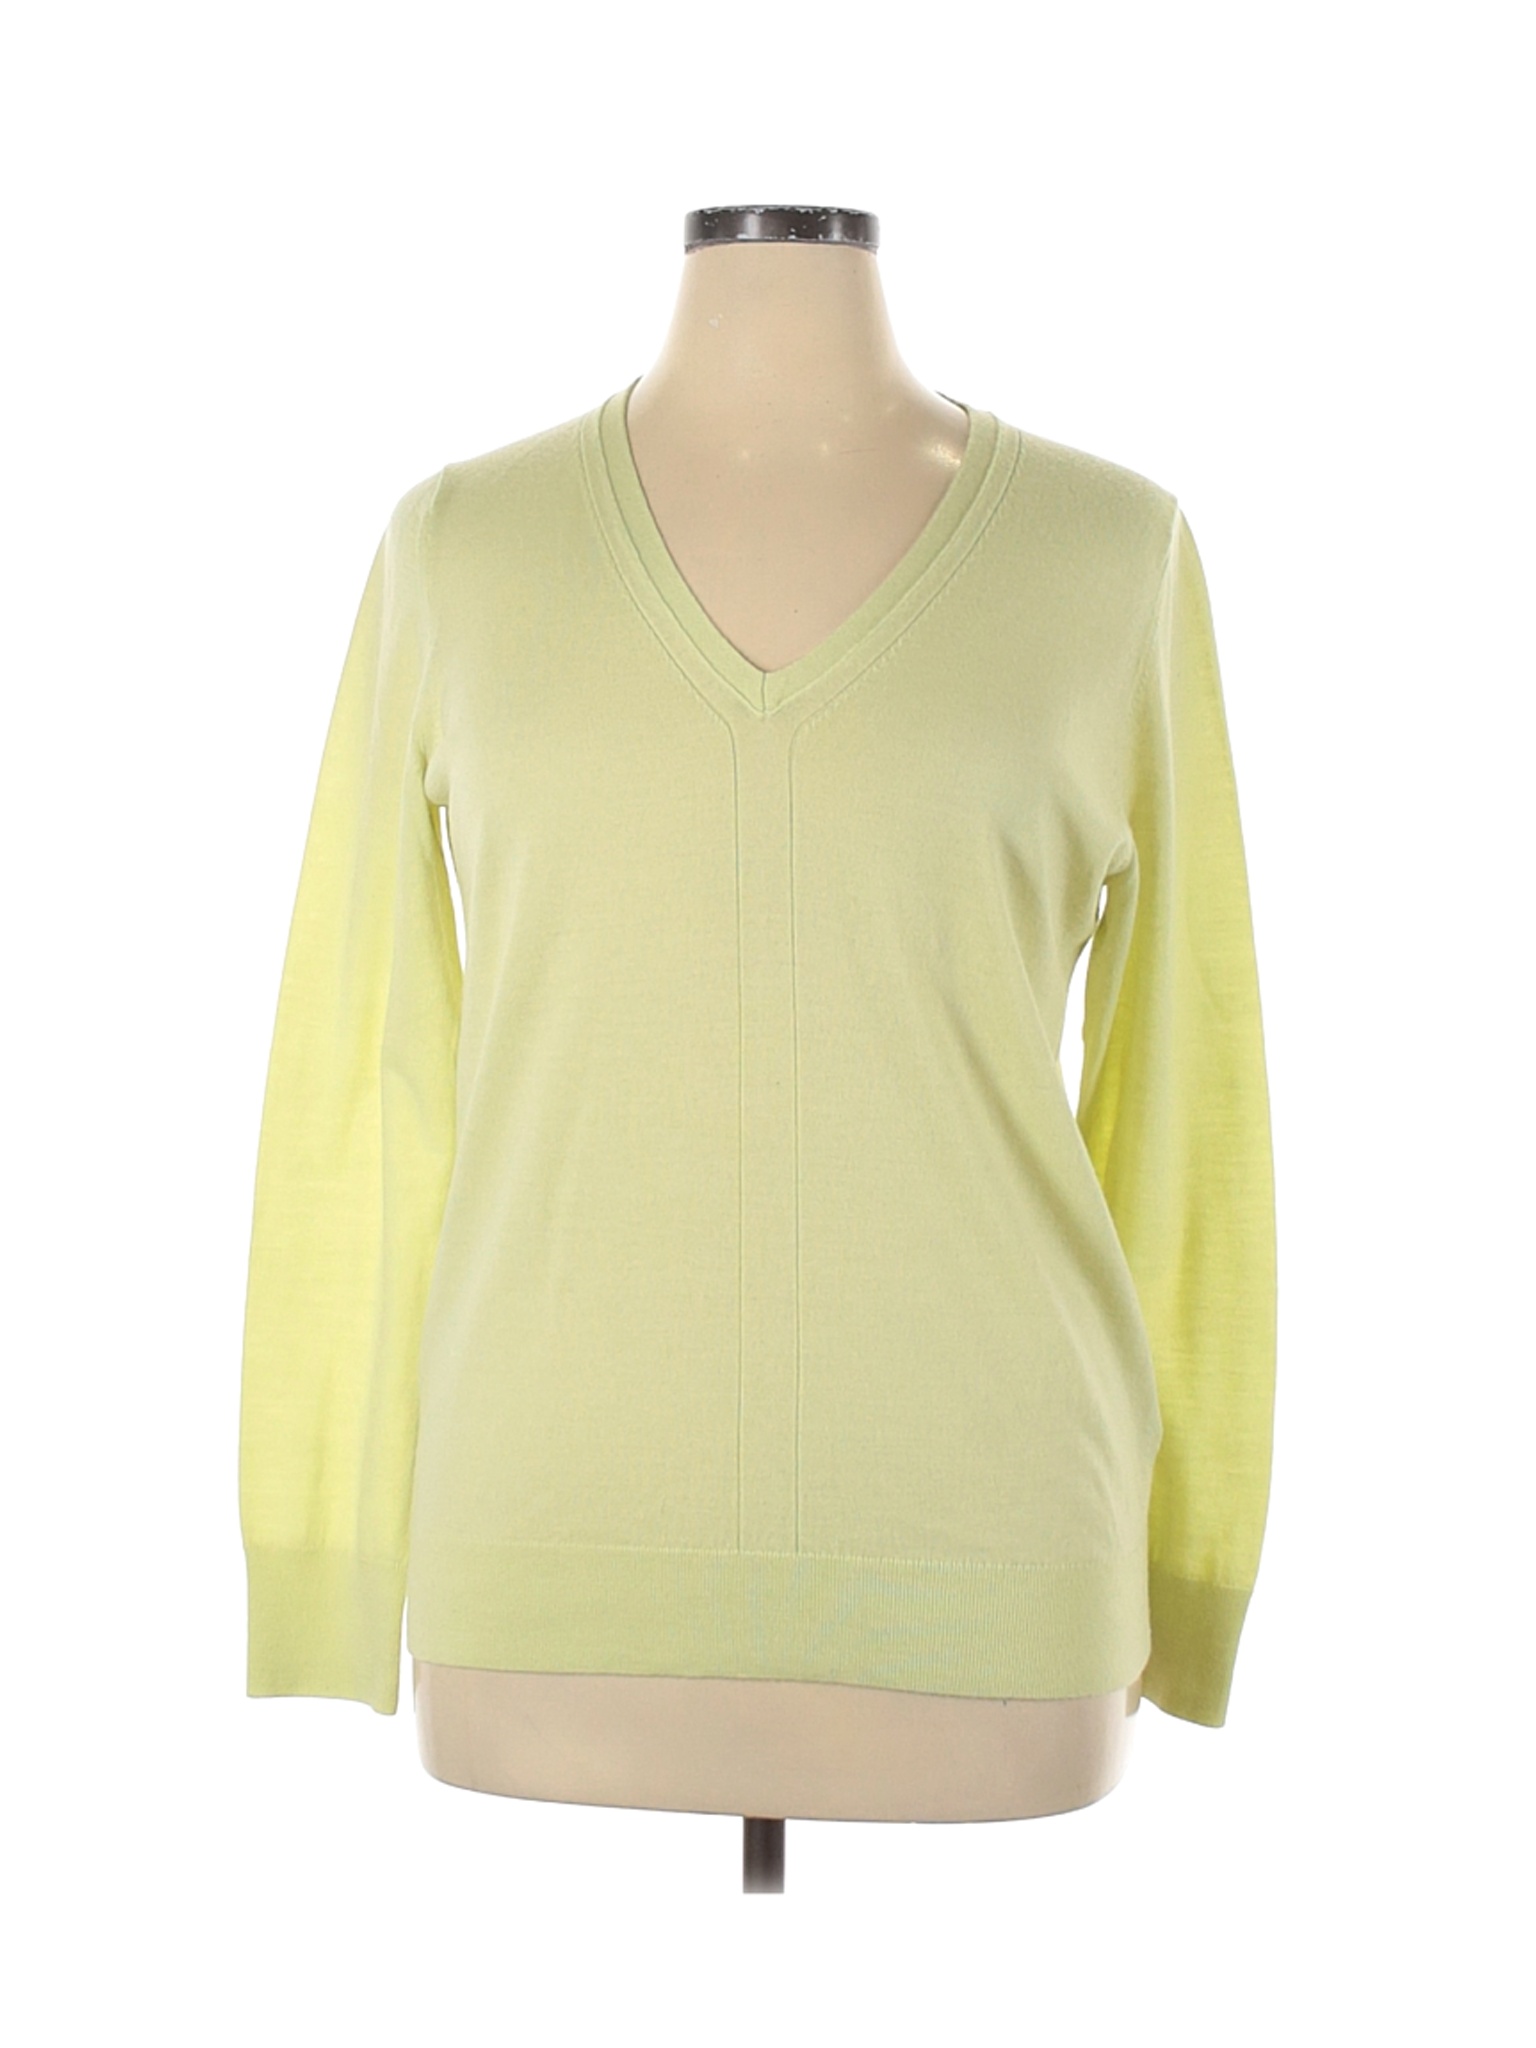 Banana Republic Women Green Wool Pullover Sweater XL | eBay